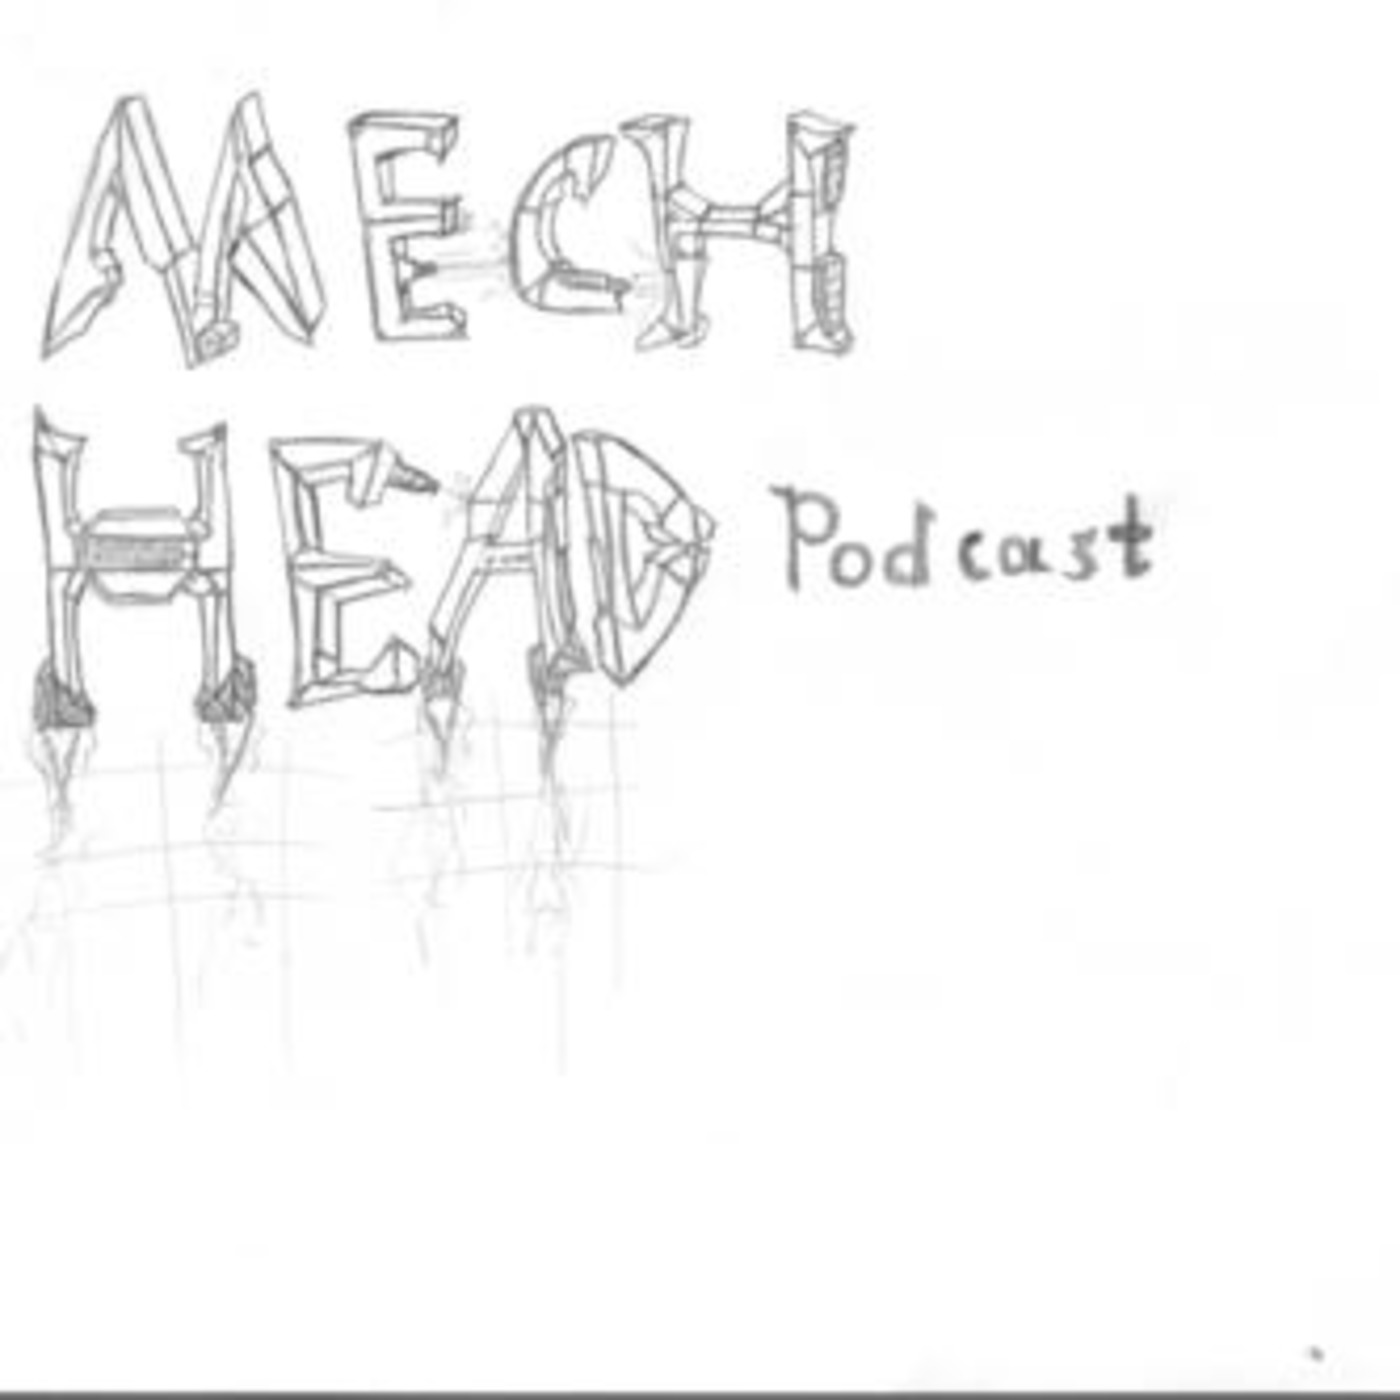 MechHead Podcast #26!